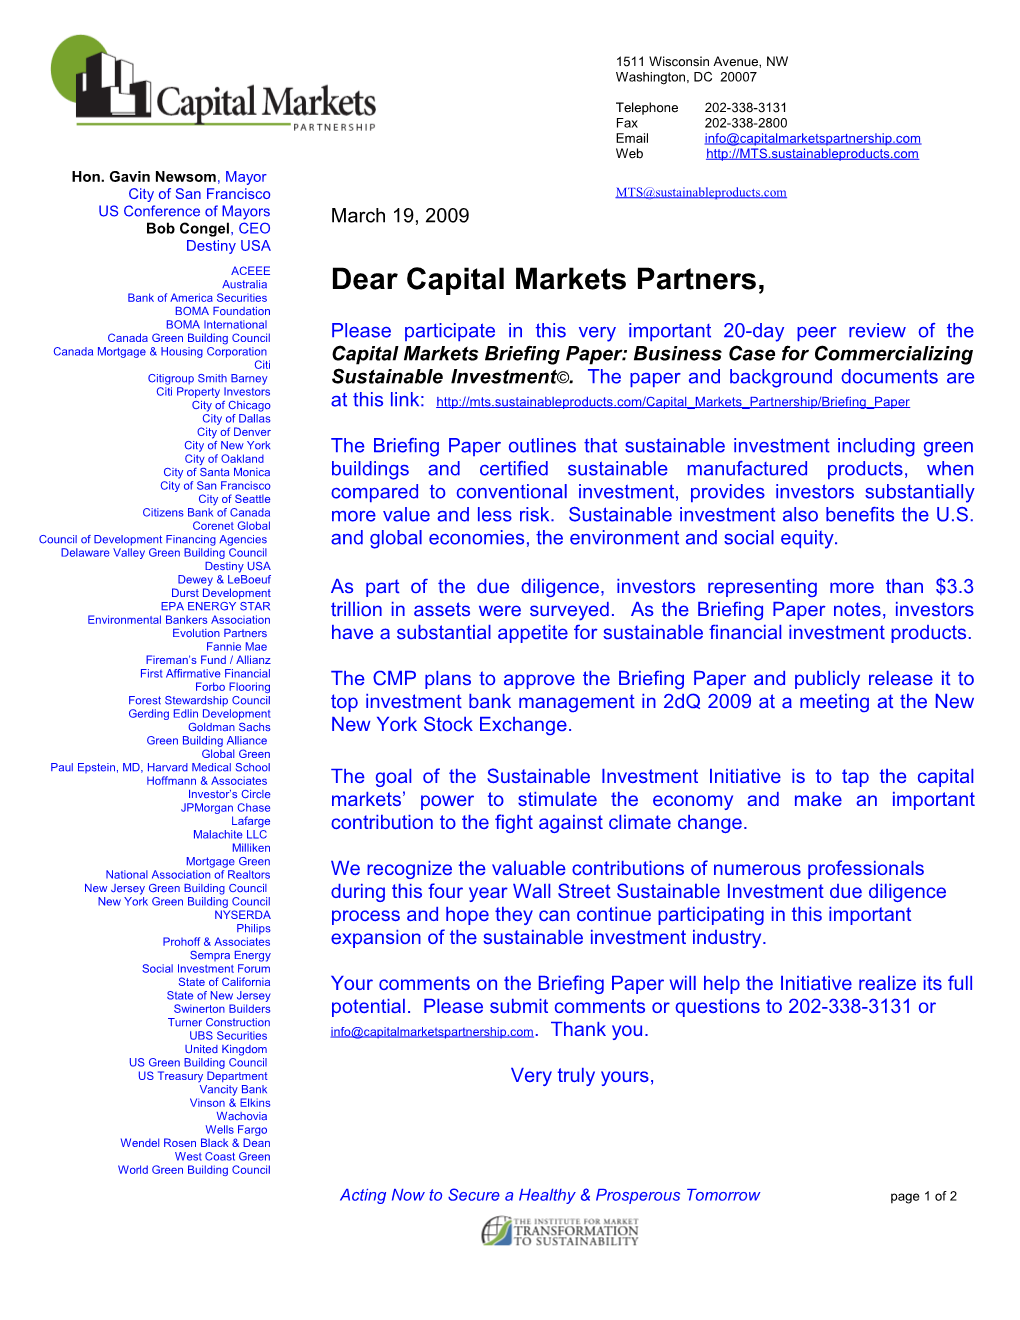 Dear Capital Markets Partners